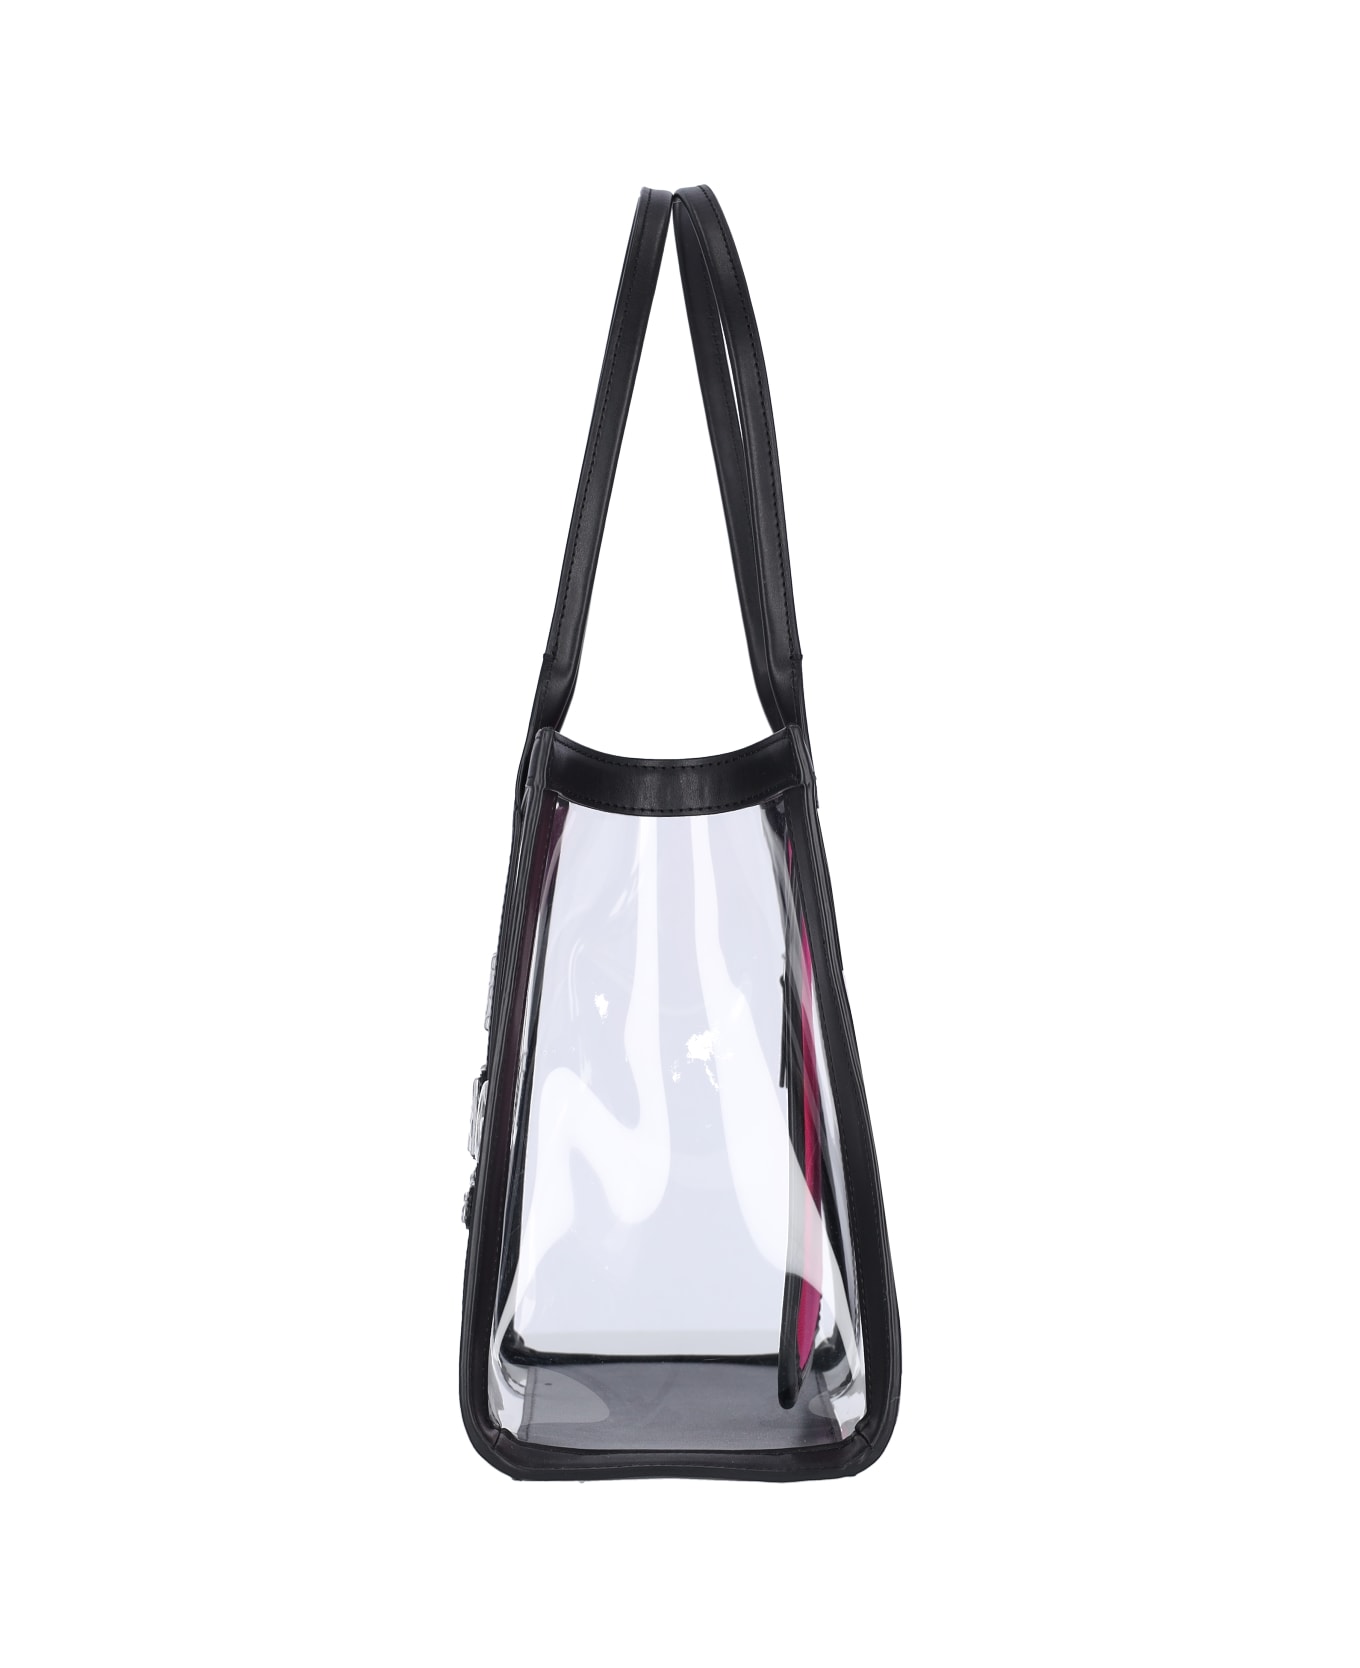 Marc Jacobs Transparent Medium Tote Bag - Black   トートバッグ